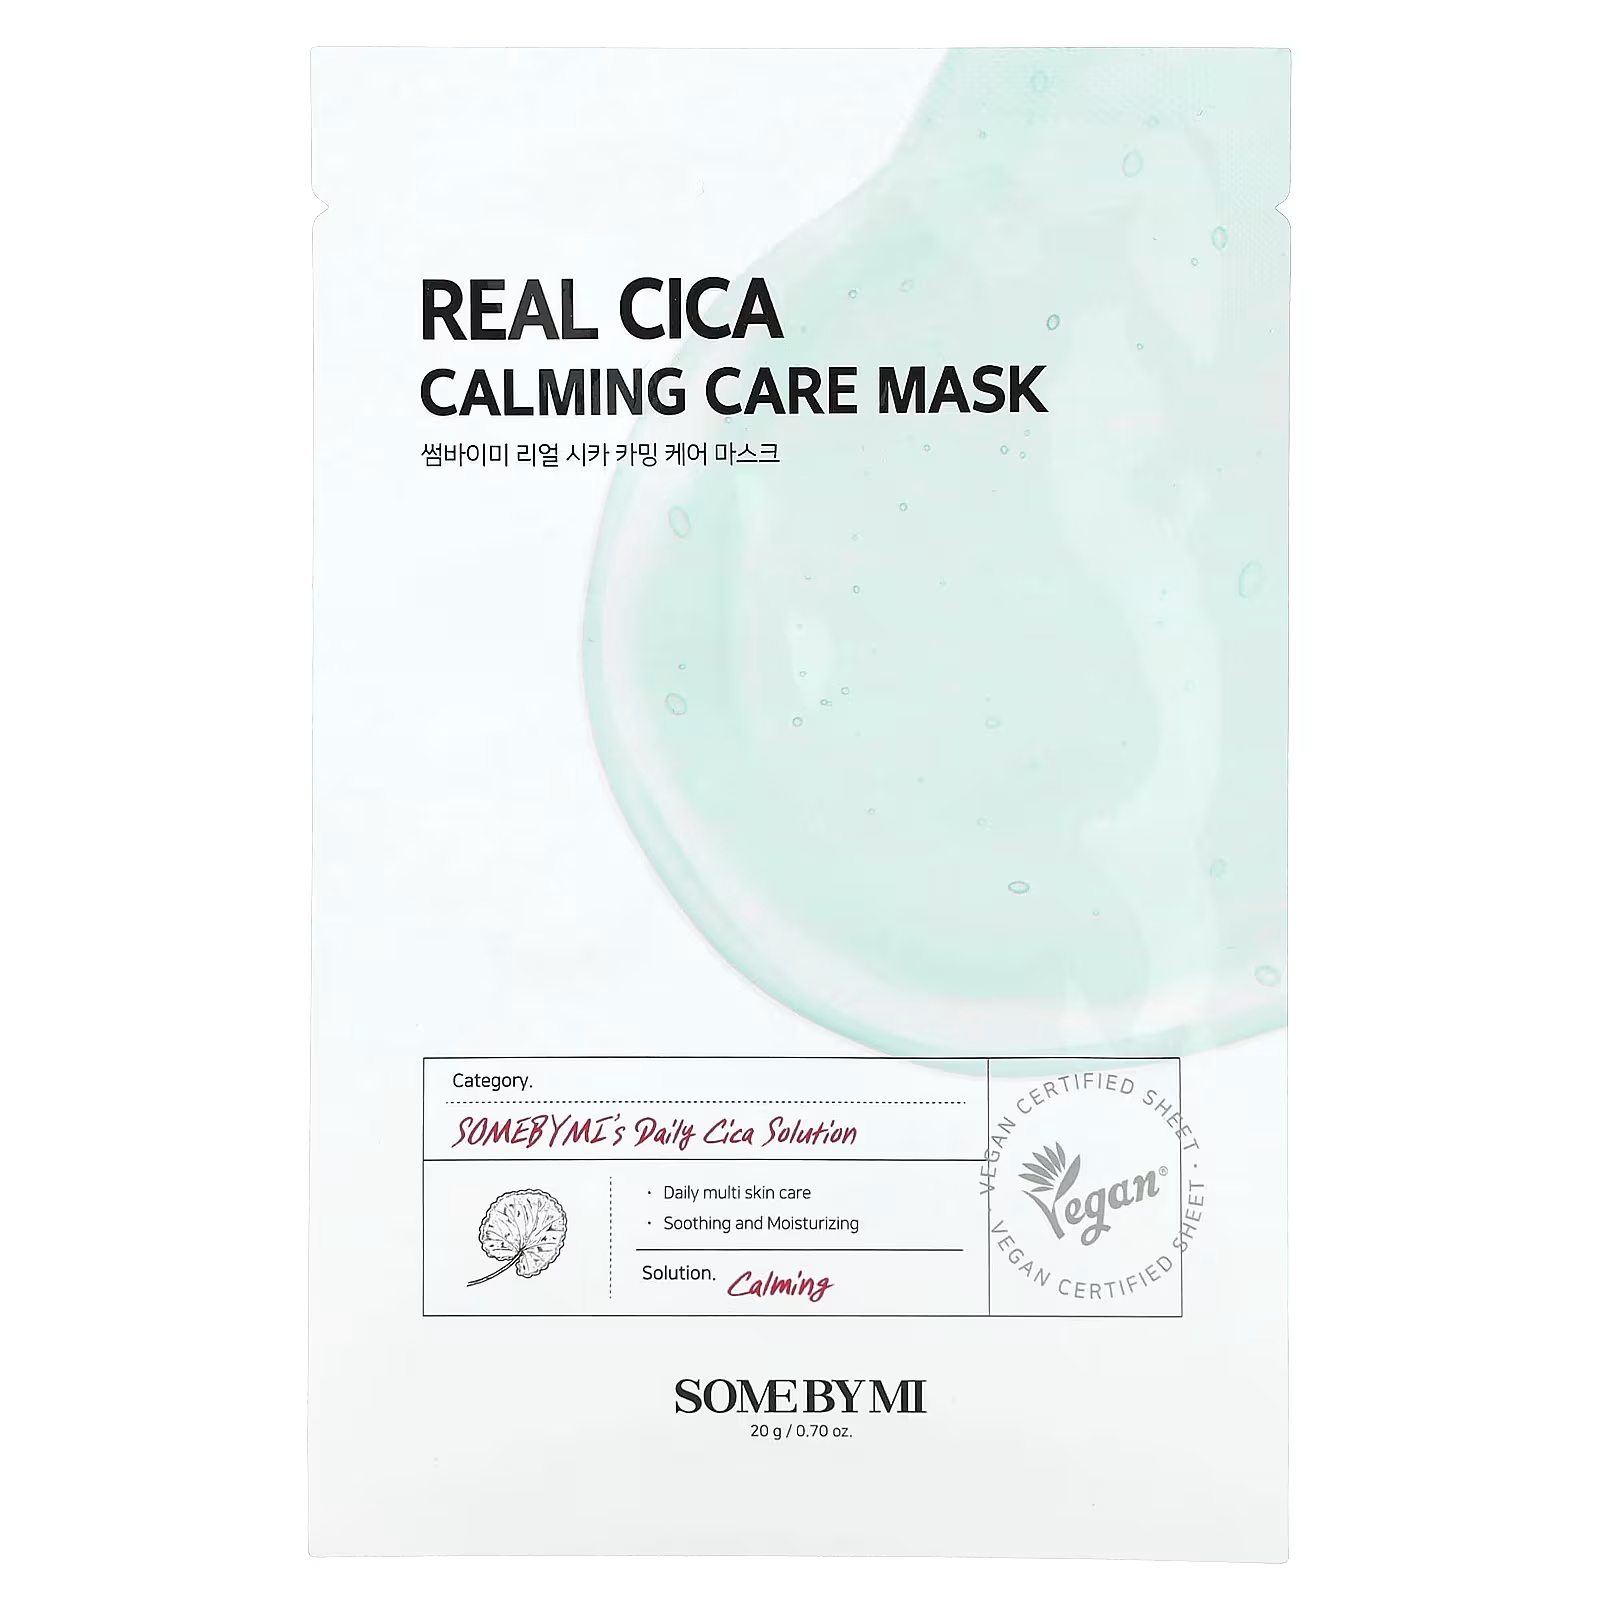 SOME BY MI Real Cica Calming Care Beauty Mask, 1 лист, 0,70 унции (20 г) цена и фото